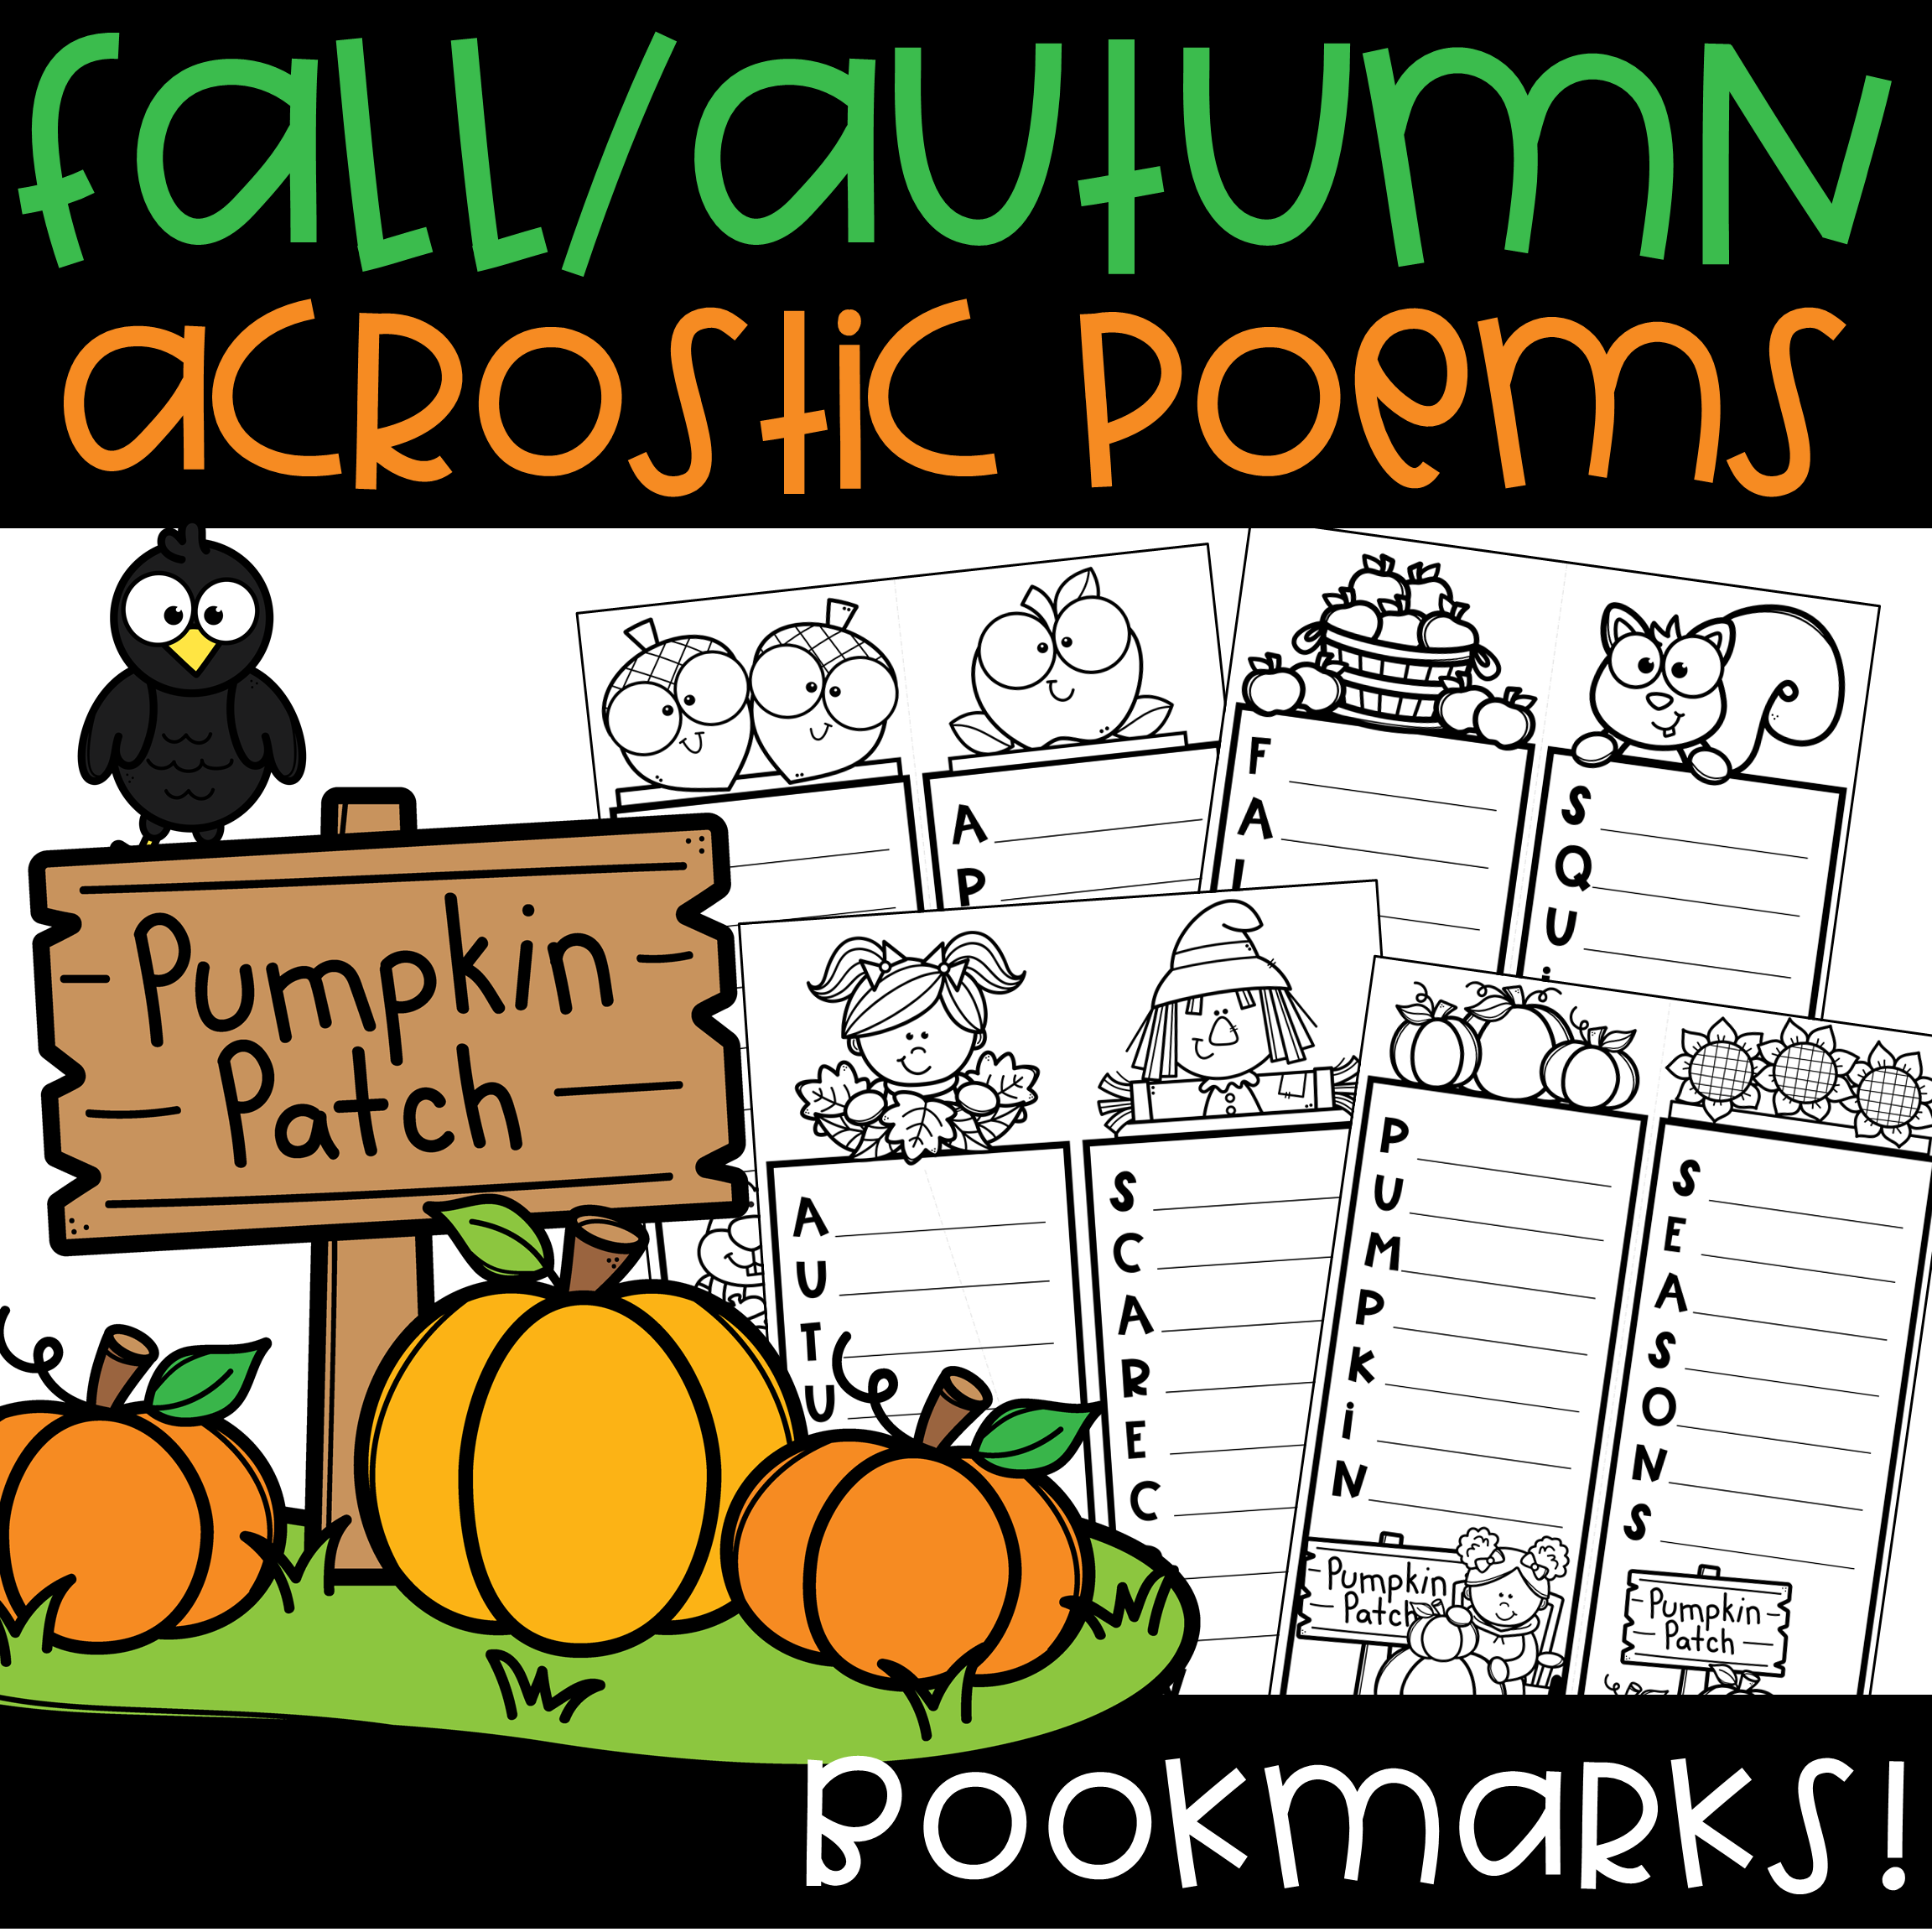 Fall acrostic poem bookmark autumn creative writing made by teachers